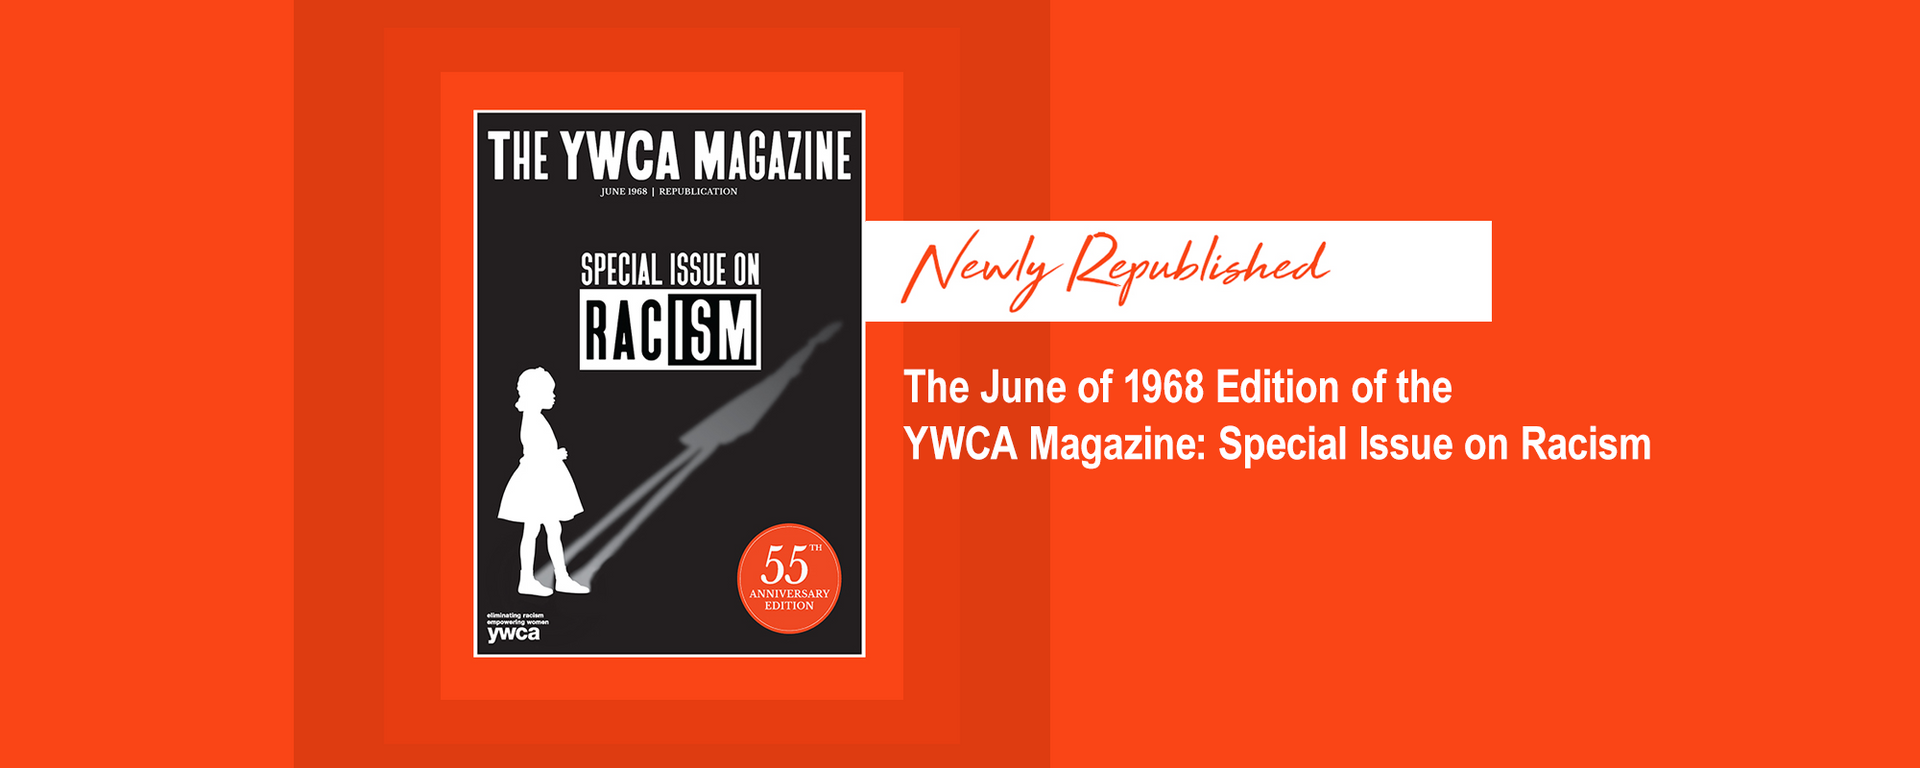 Cover of thge YWCA Magazine